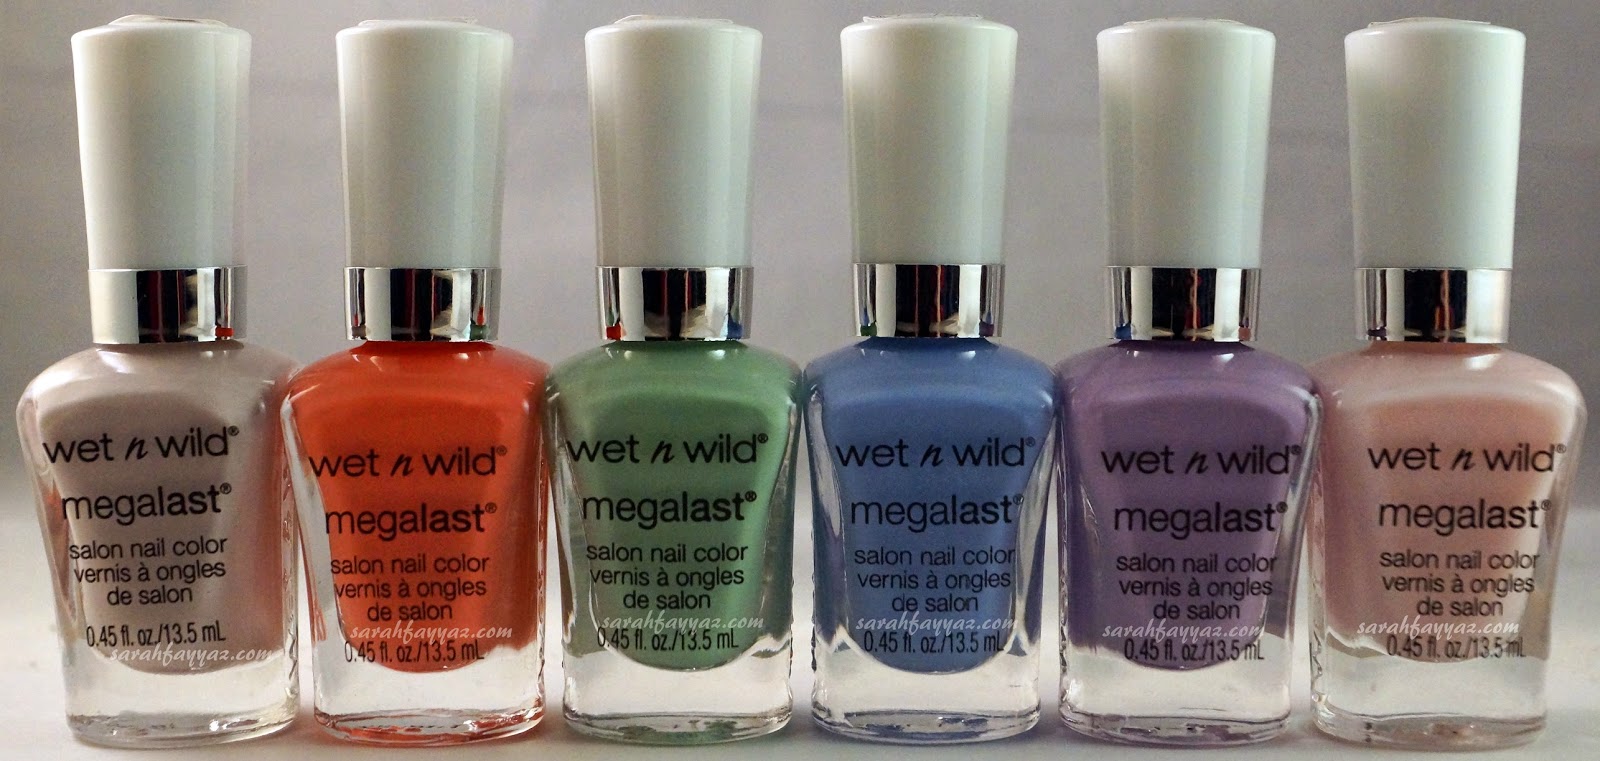 5. Wet n Wild Megalast Nail Color in "Heatwave" - wide 7